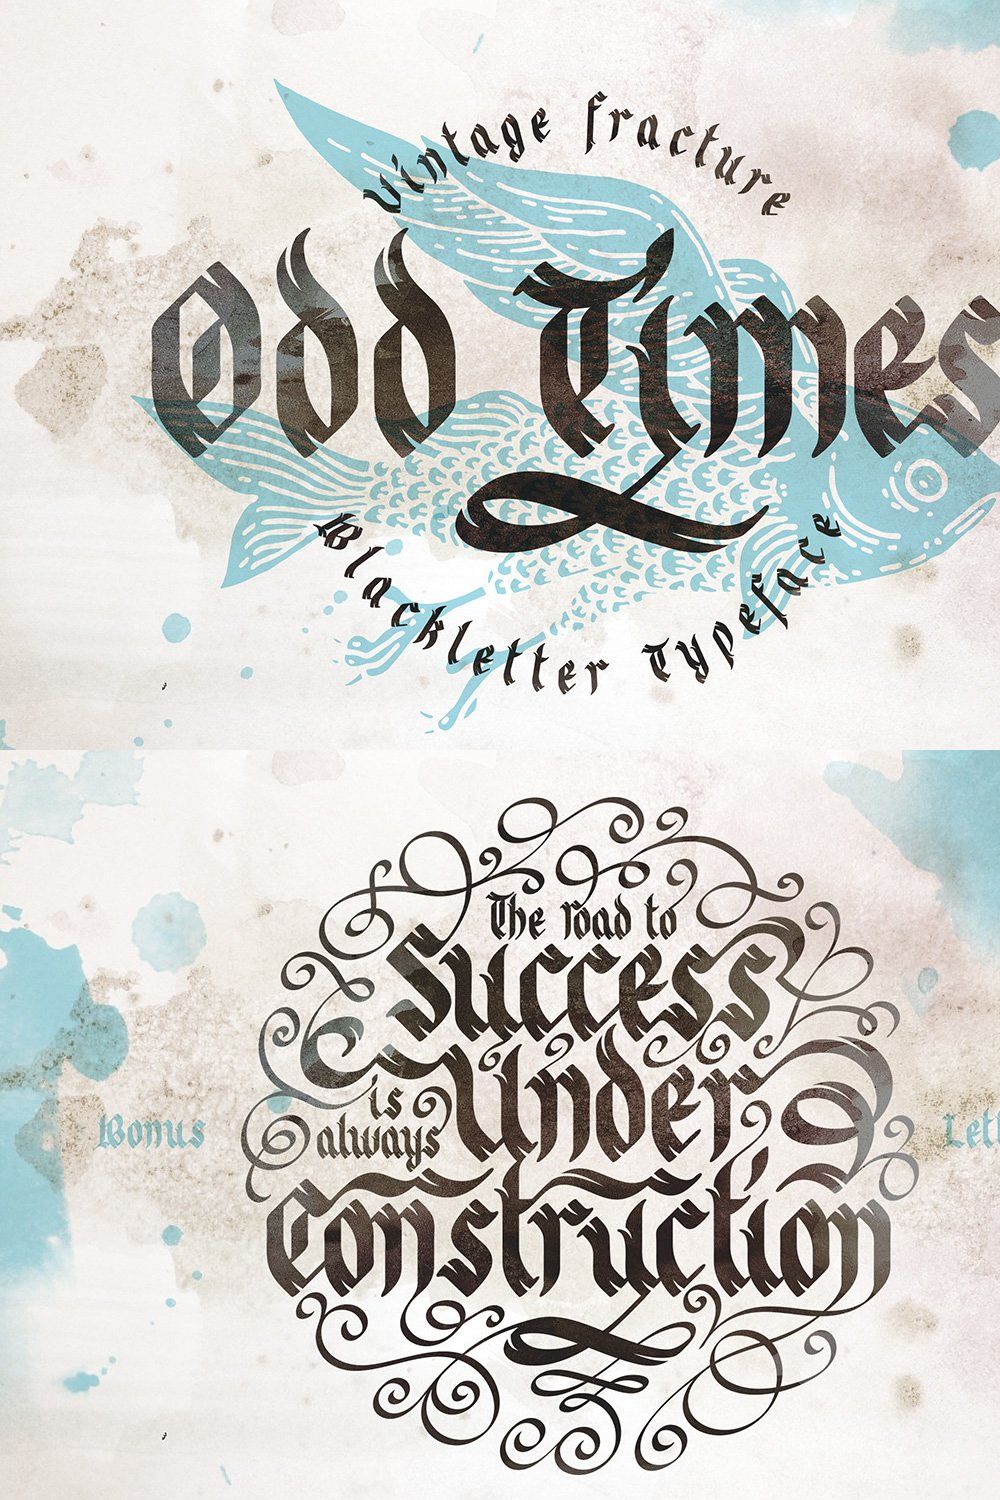 Odd times typeface + bonus graphics pinterest preview image.